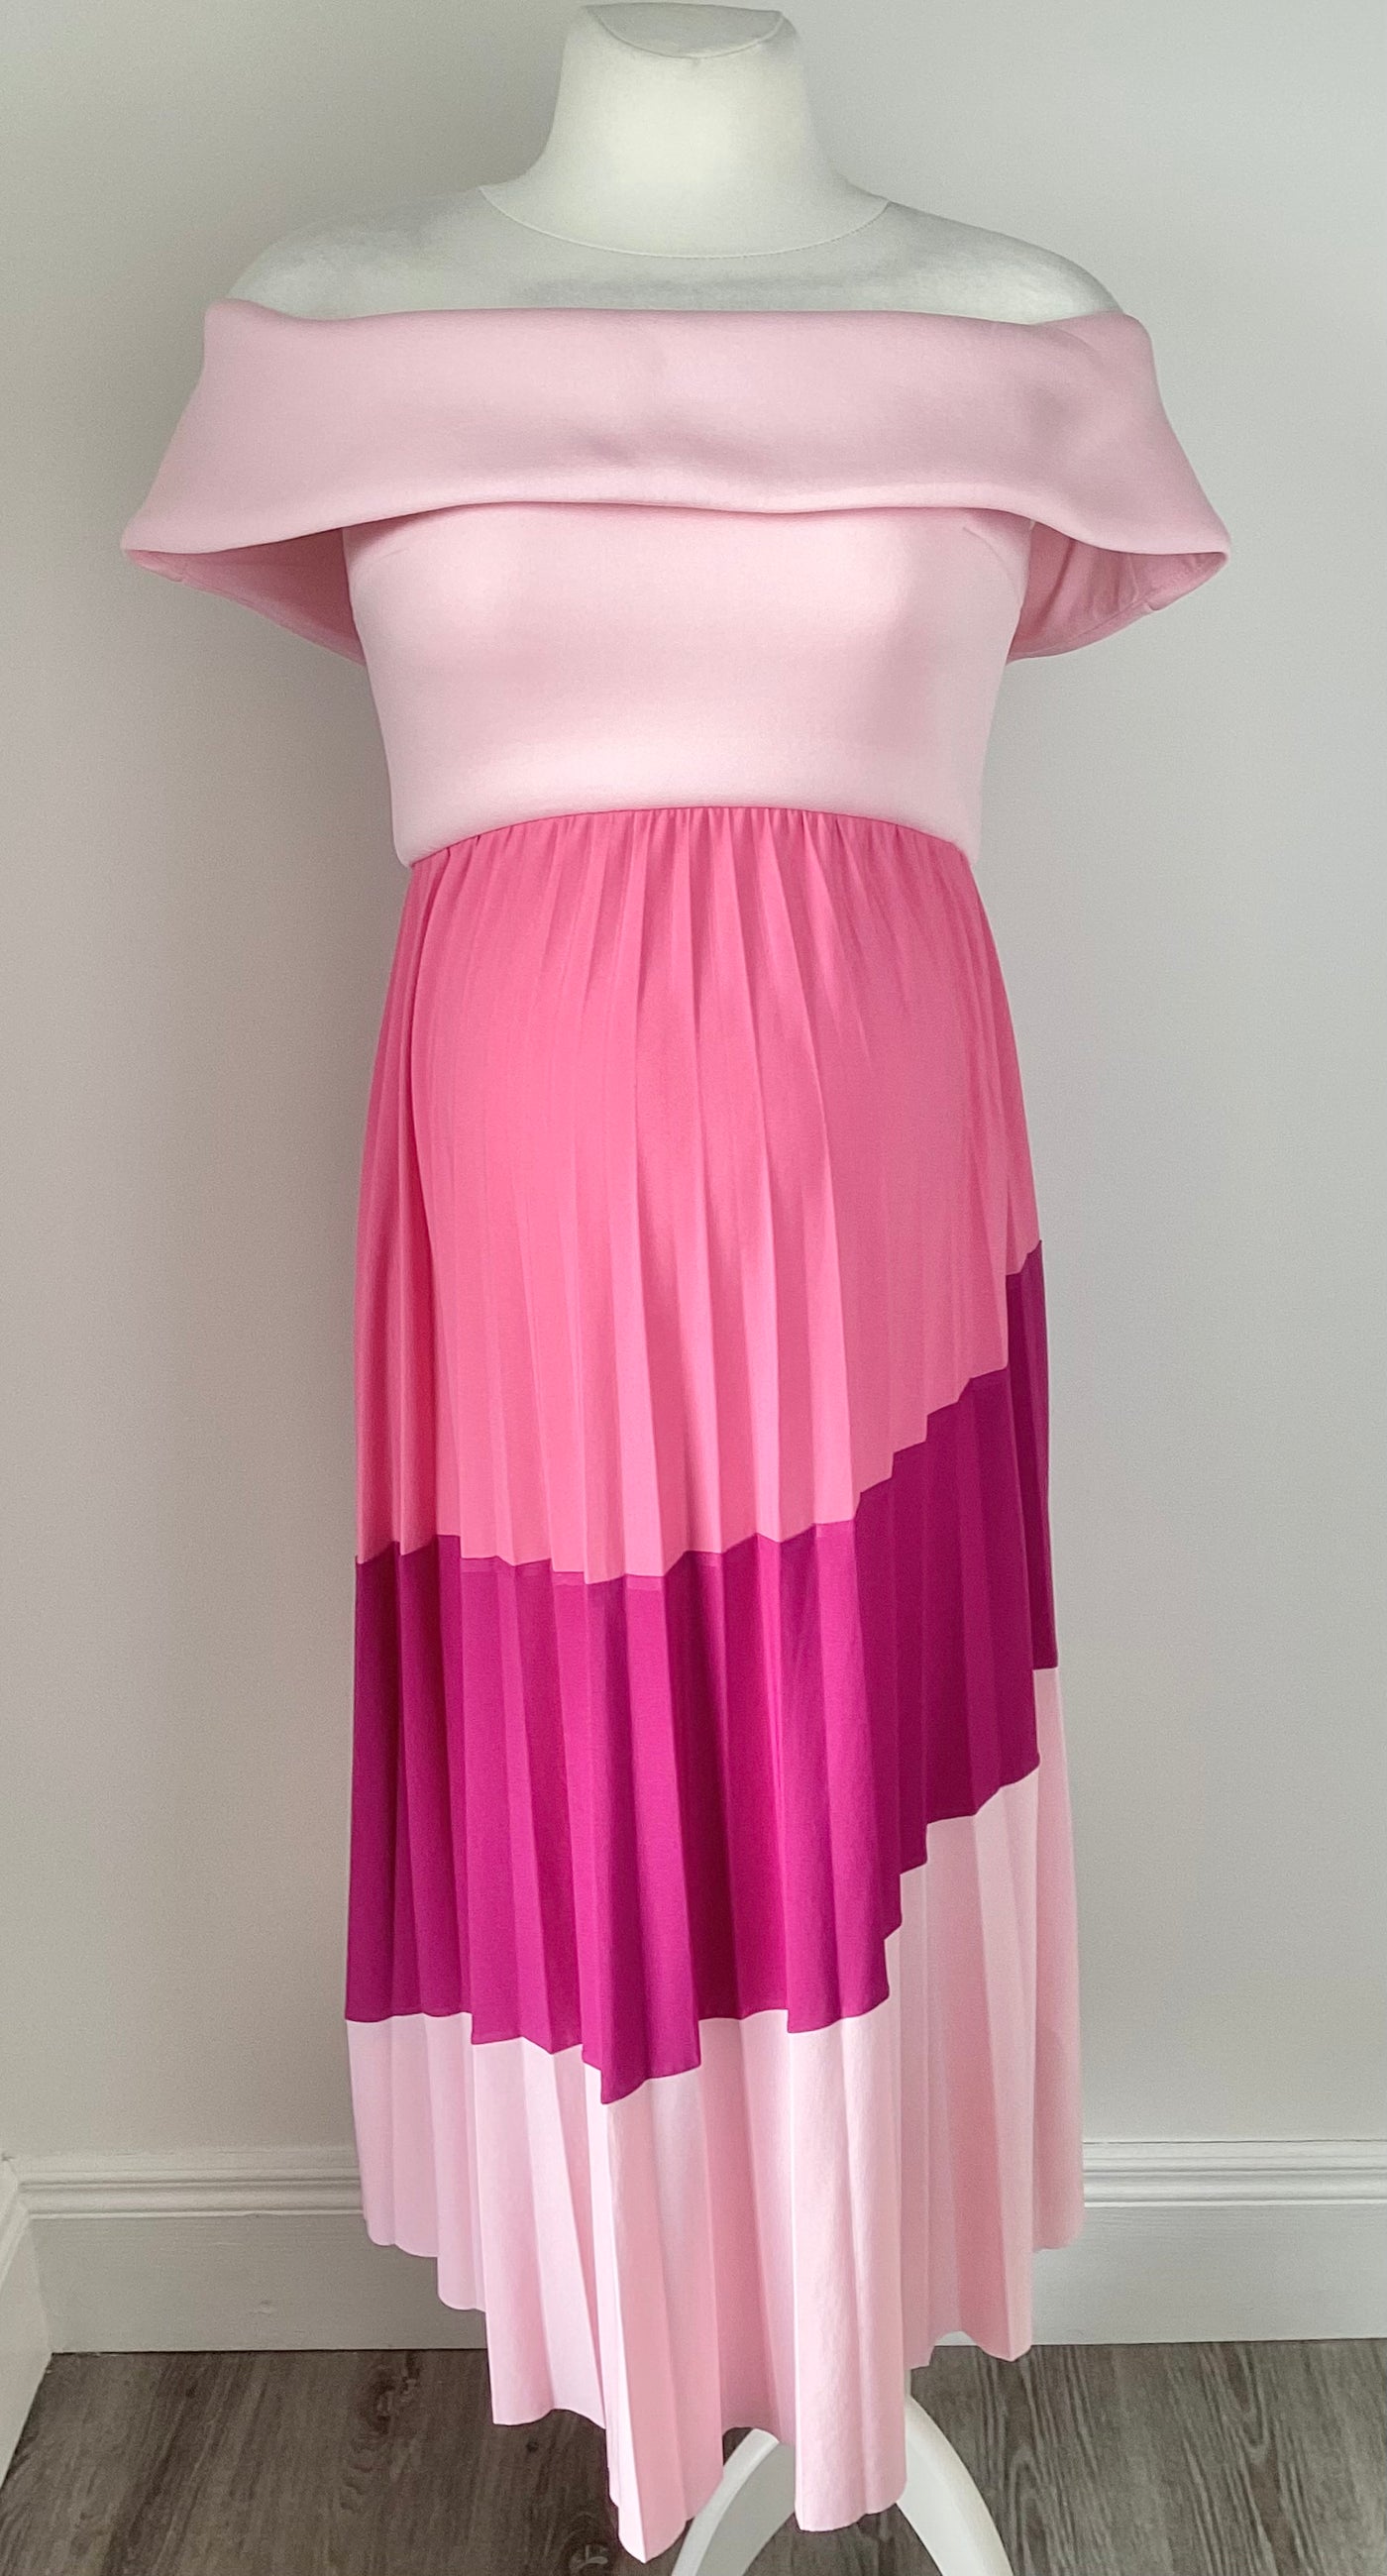 ASOS Maternity pink bardot dress with block colour pleat skirt - Size 10